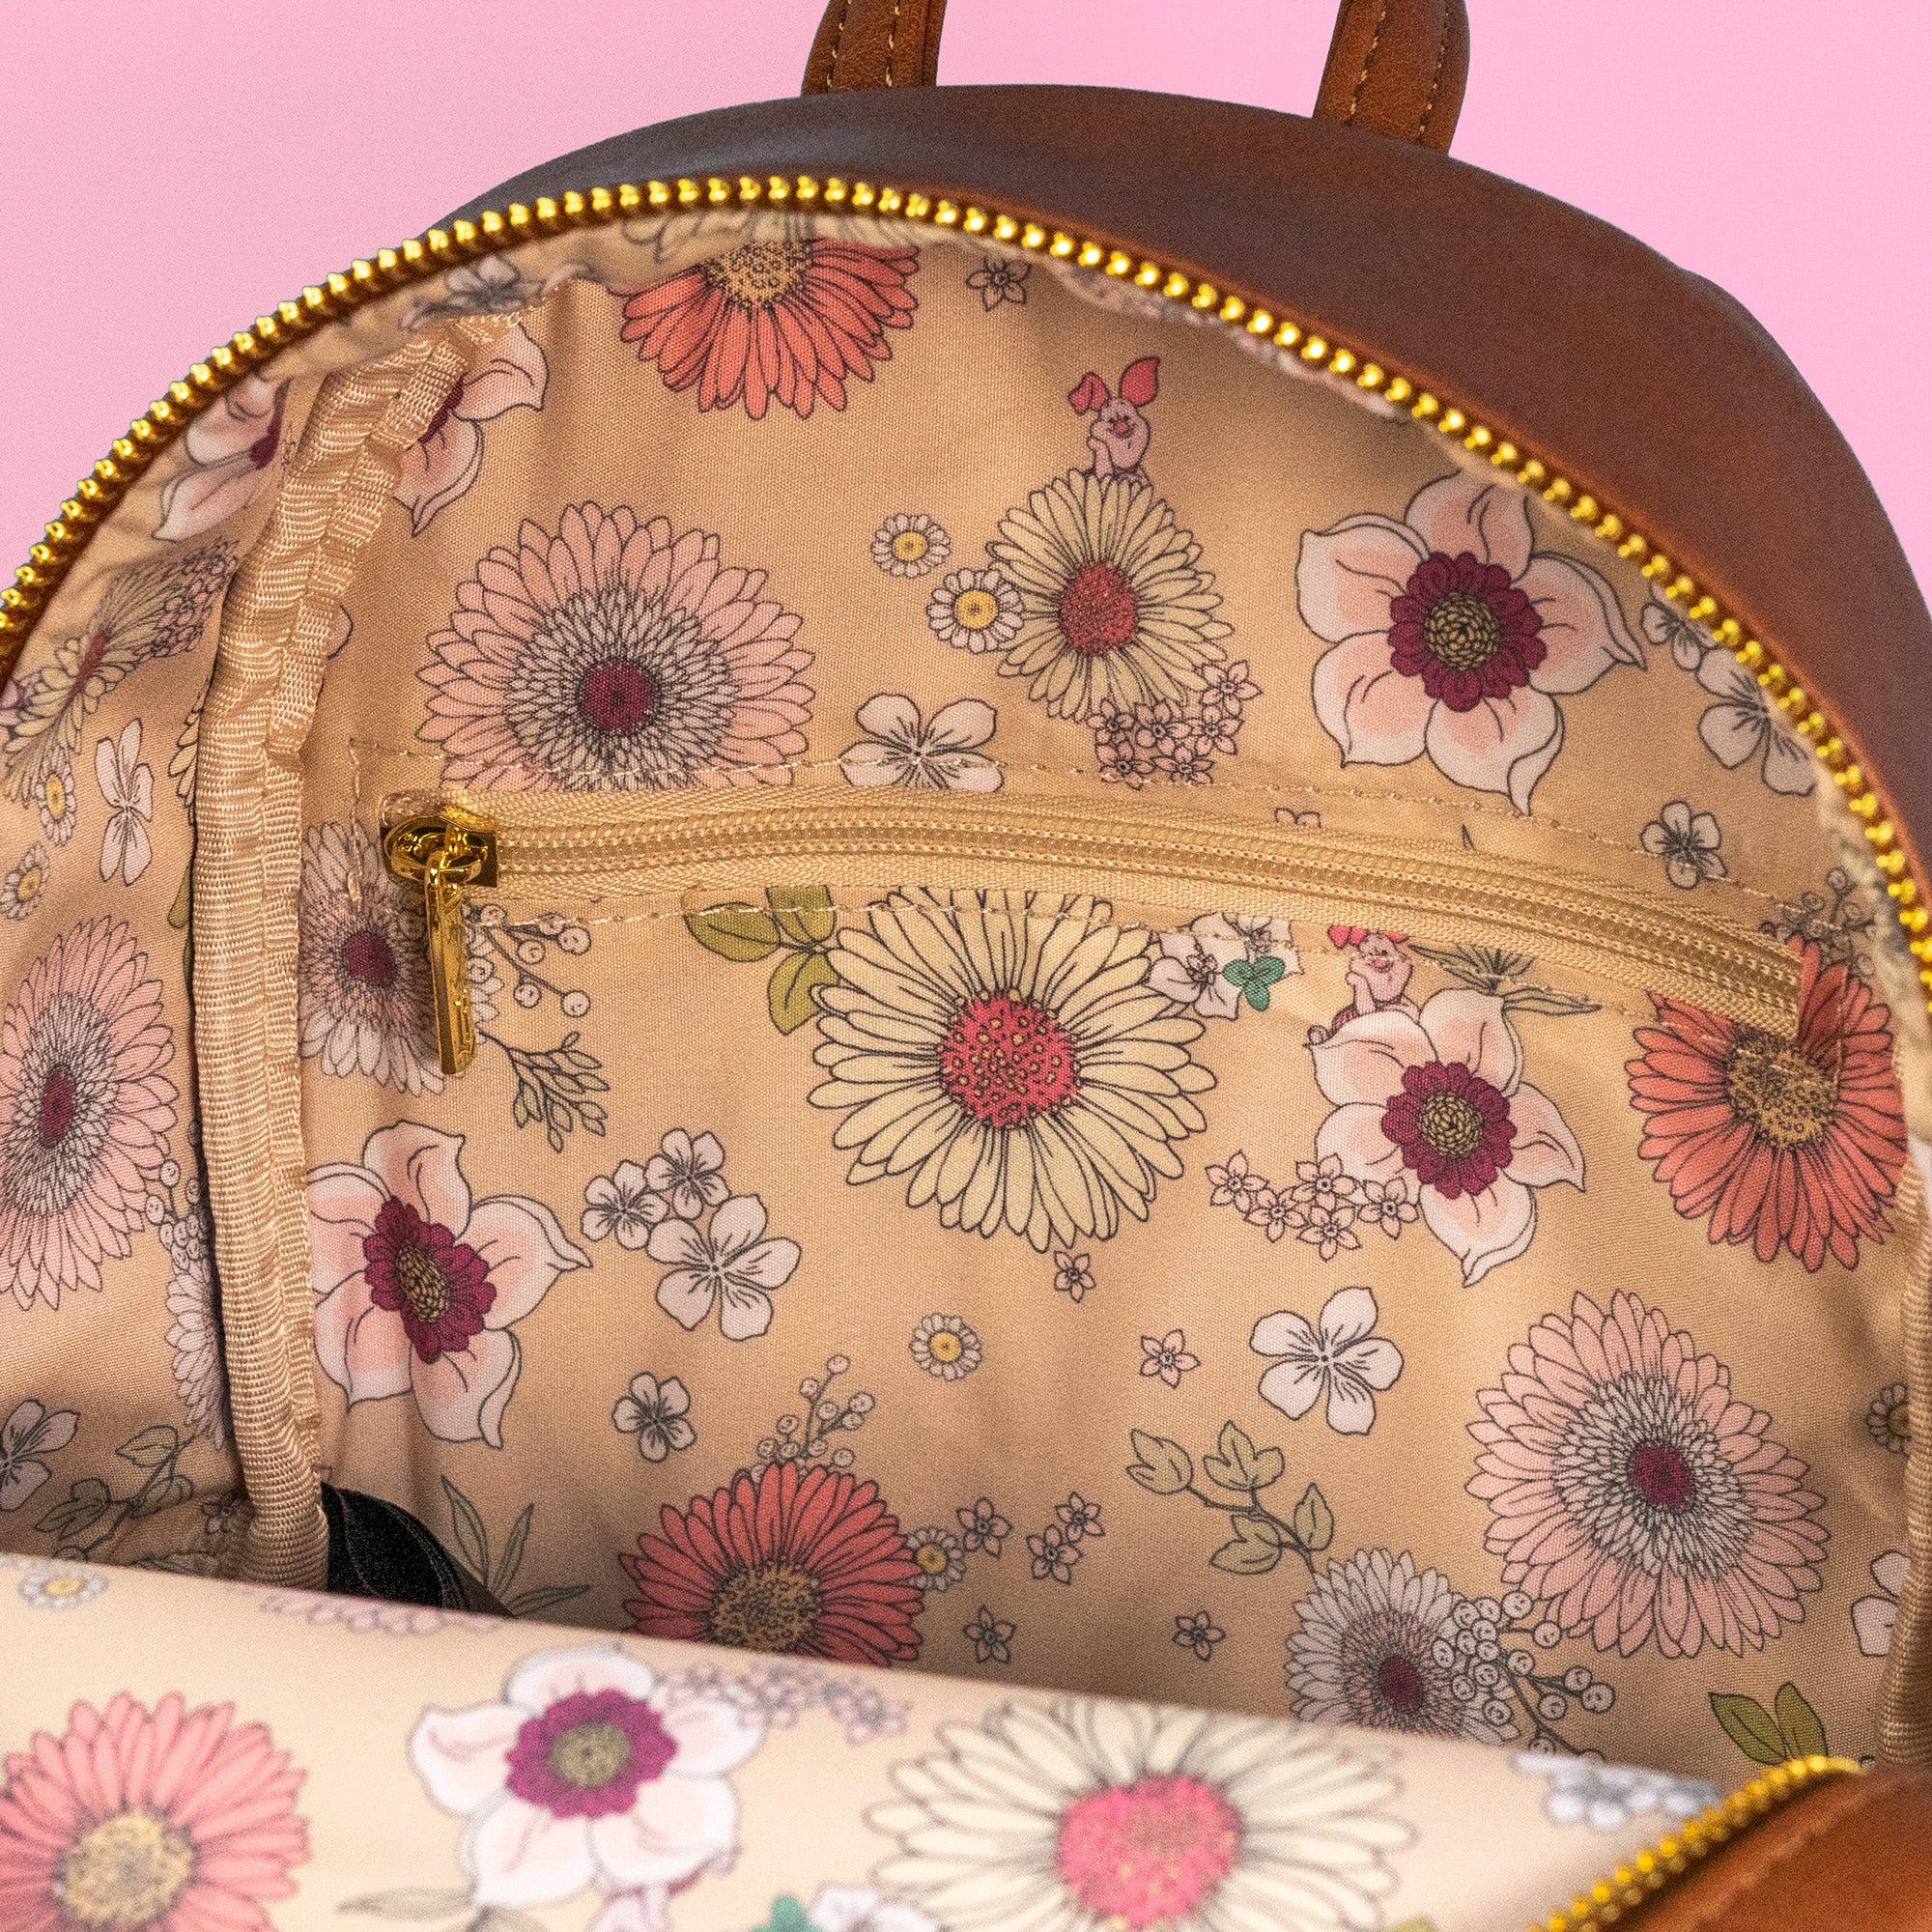 Loungefly x Disney Winnie the Pooh Floral Print Flap Pocket Mini Backpack